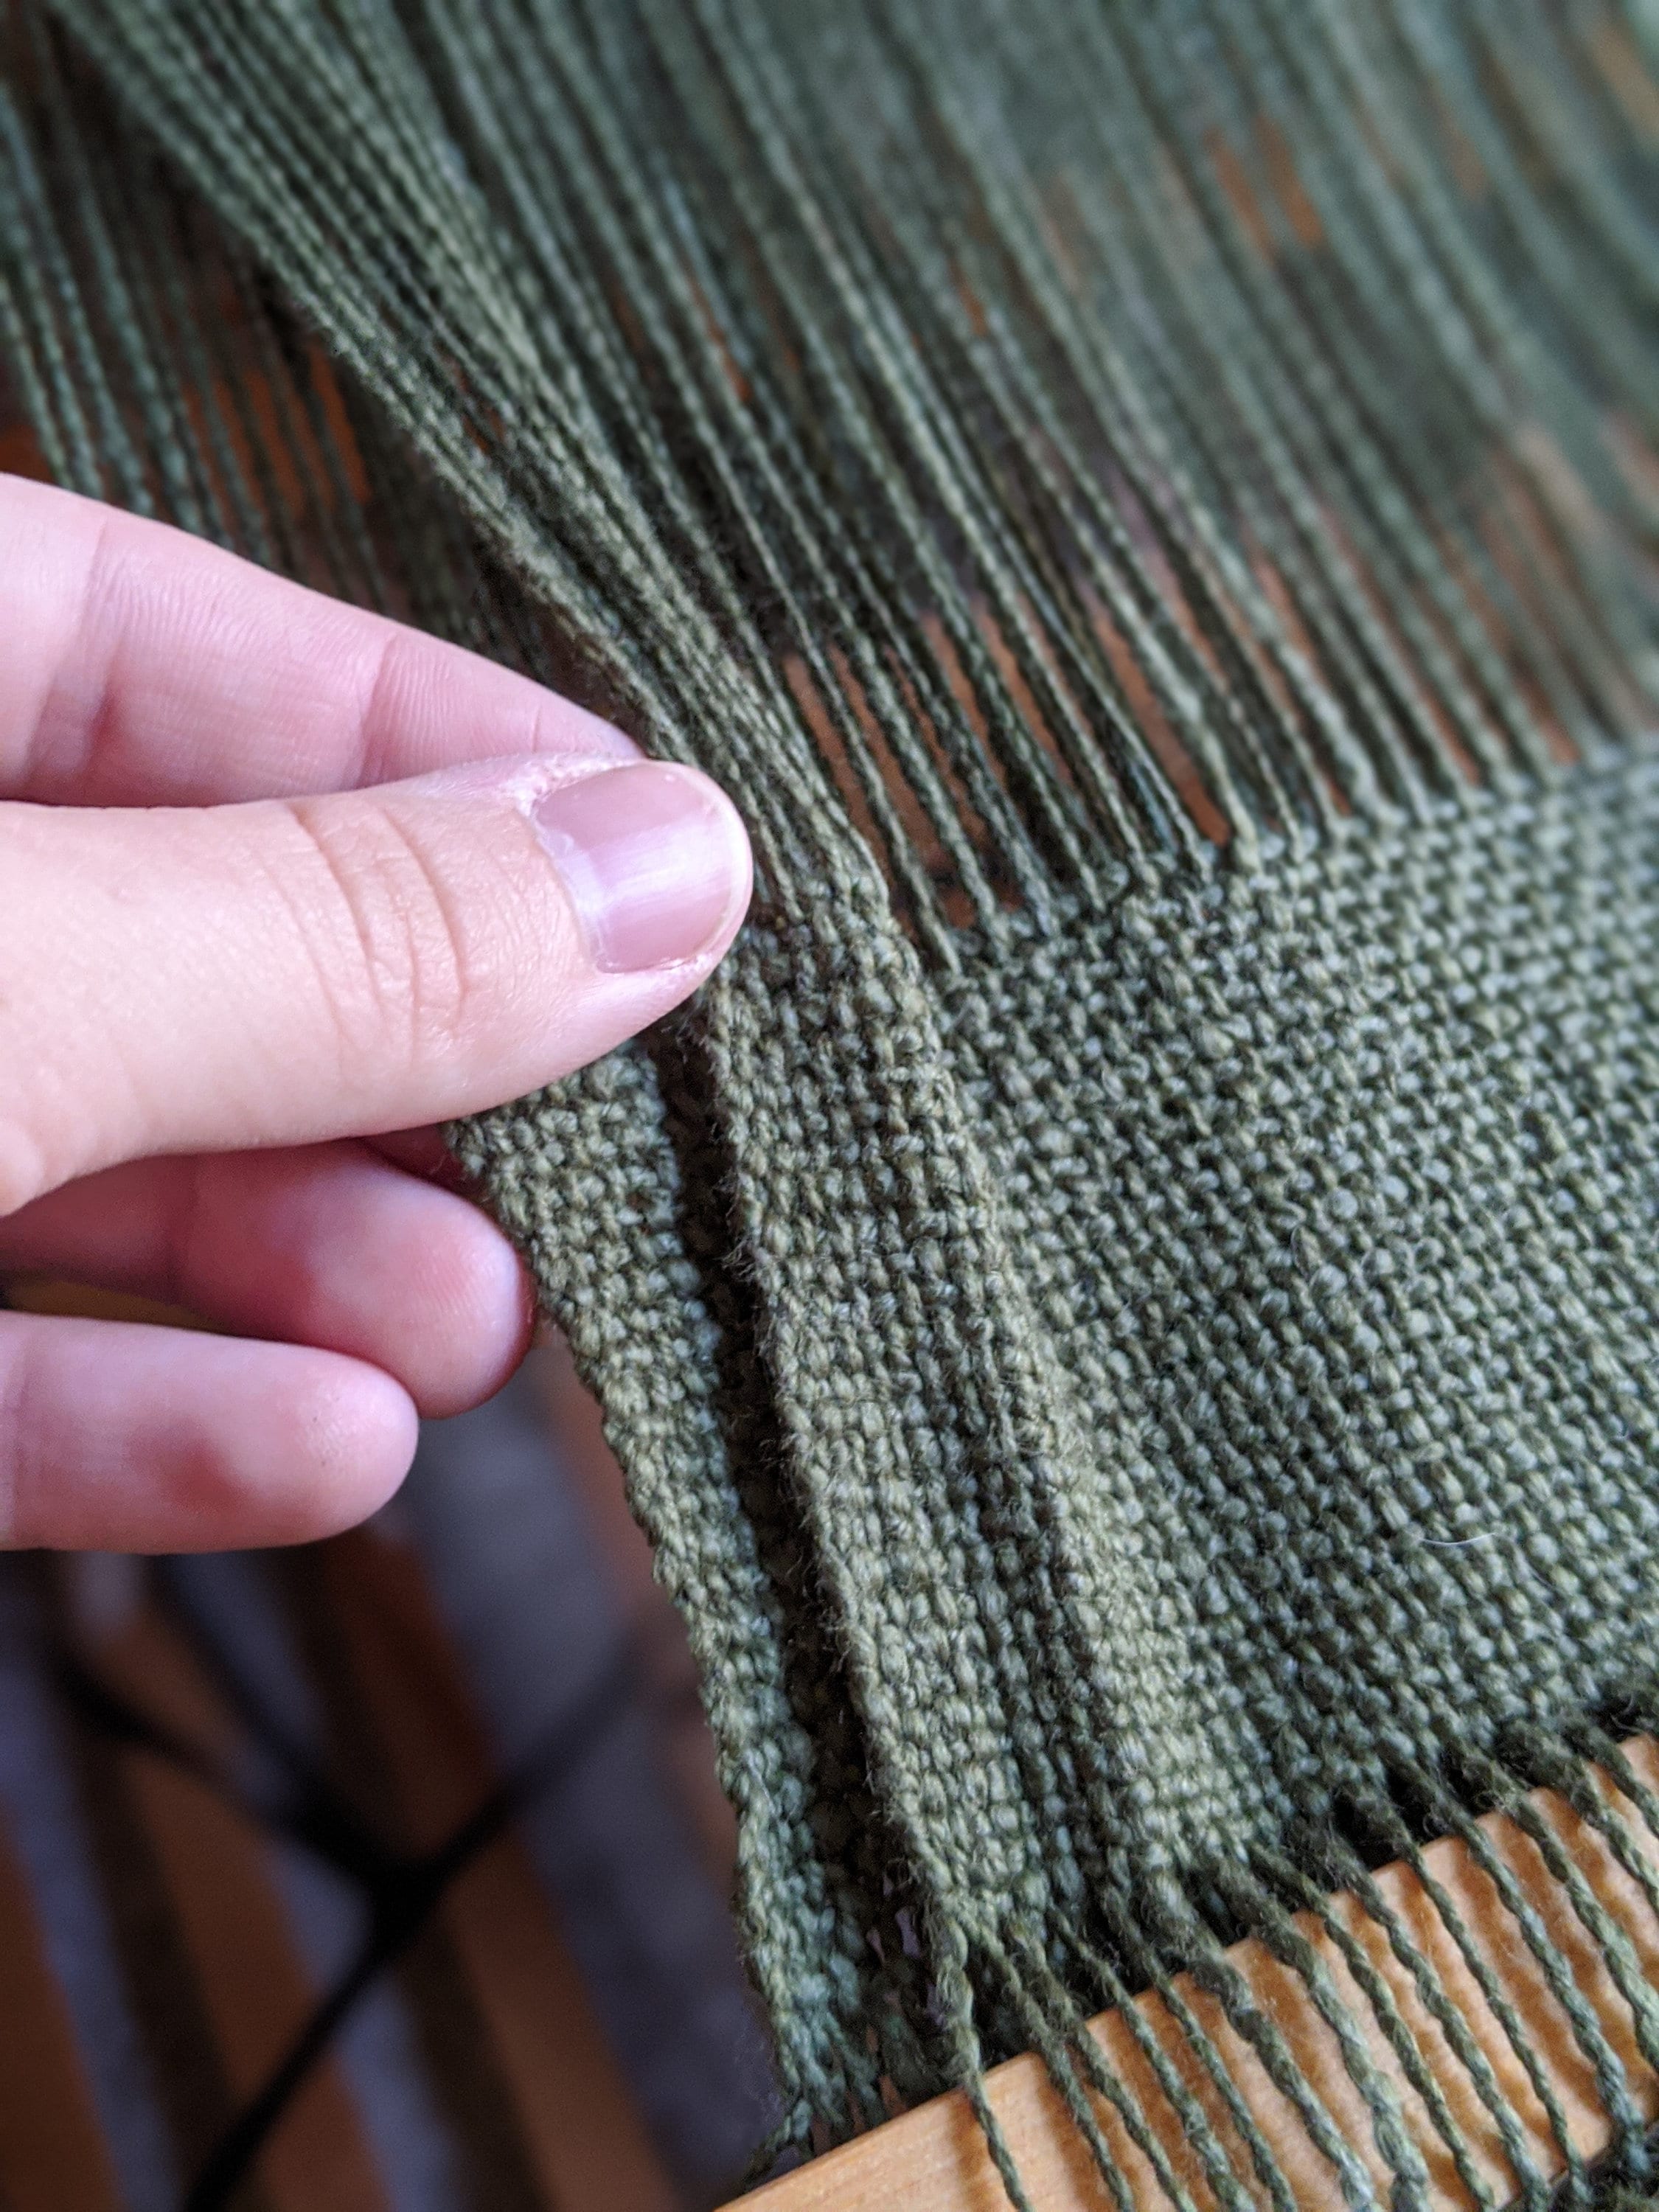 Knituk Round Knitting Loom Set of 4. All Pegs Fitted medium Gauge